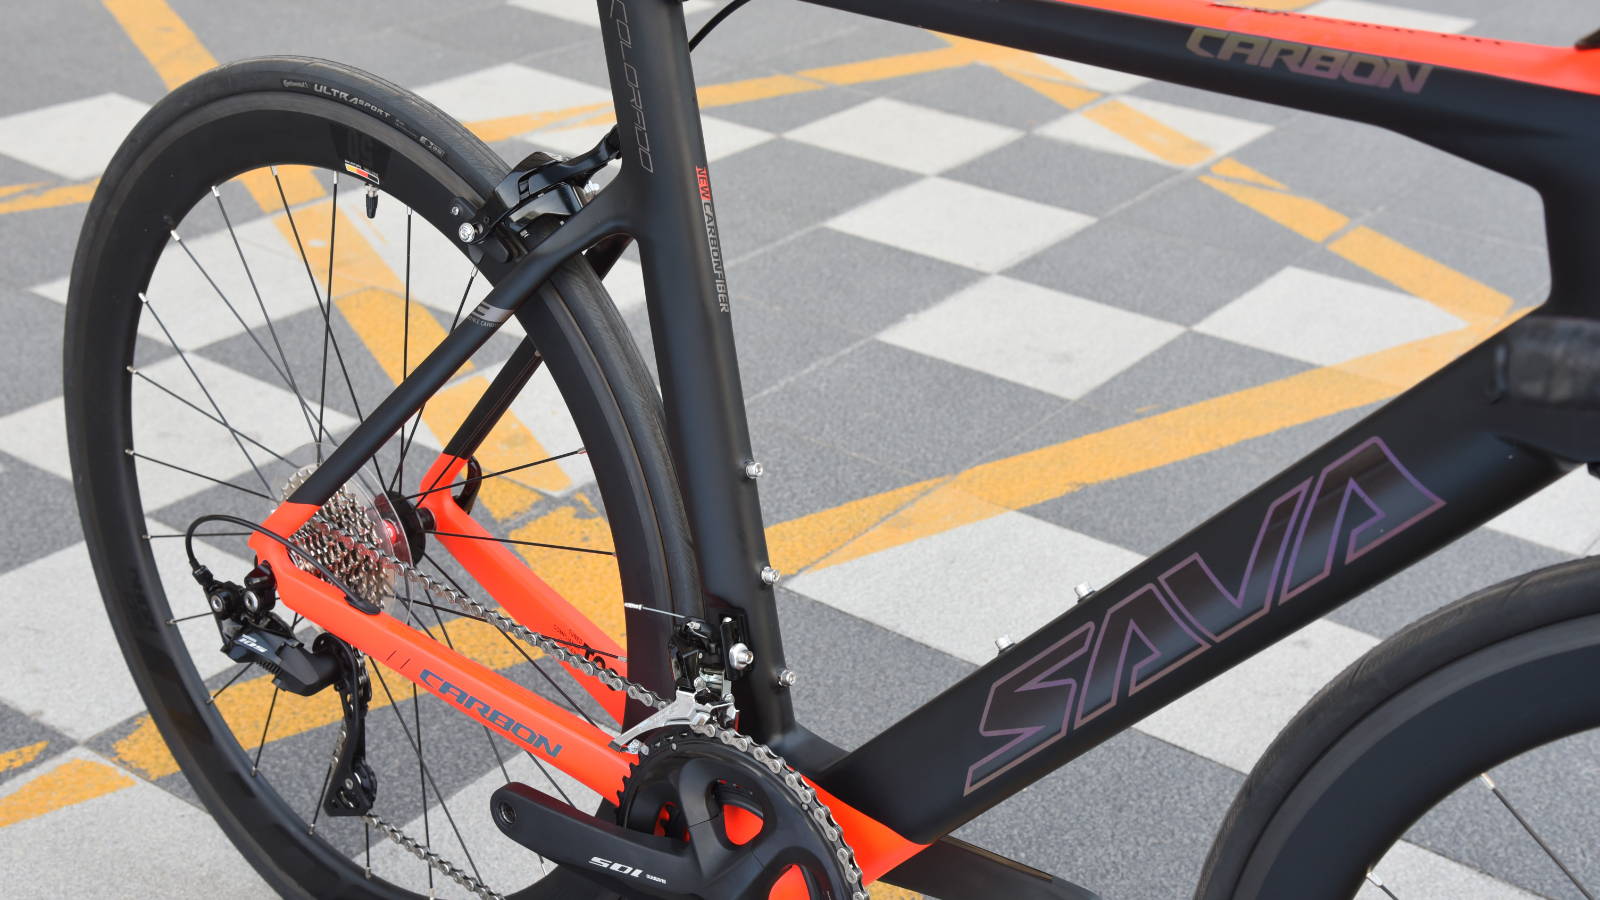 T800 carbon fiber frame-sava r09 carbon road bike with shimano r7000 groupset 22speed